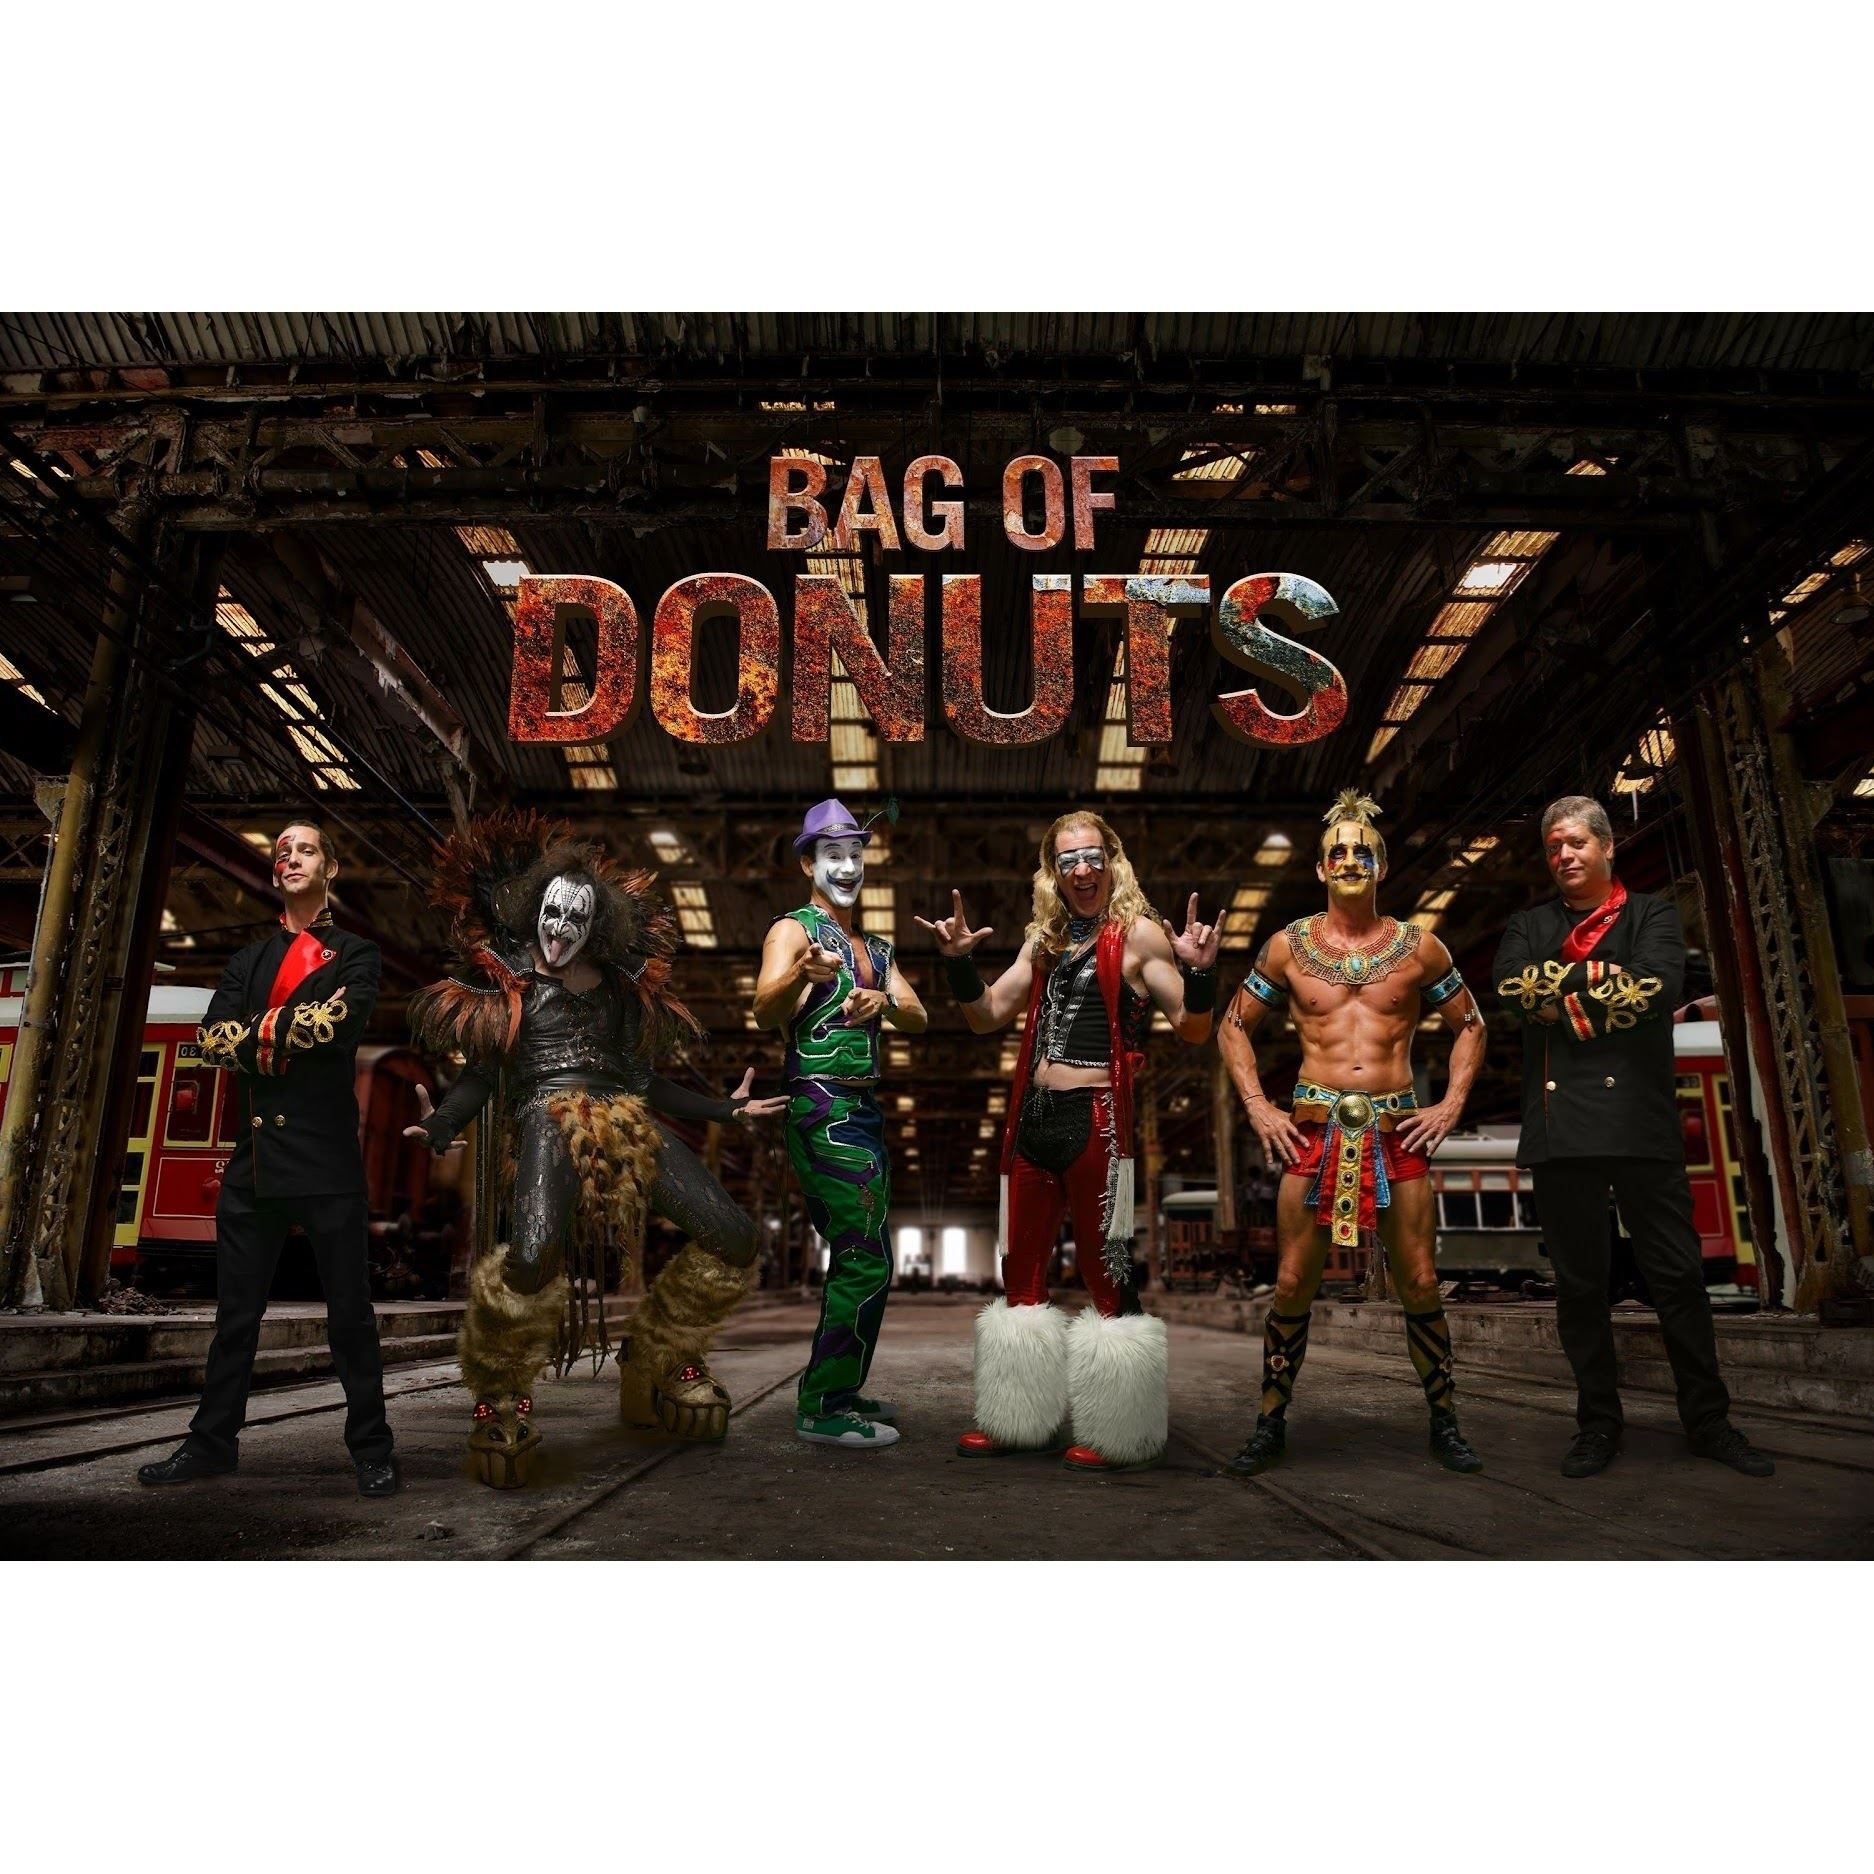 Friday - January 26th - Bag of Donuts